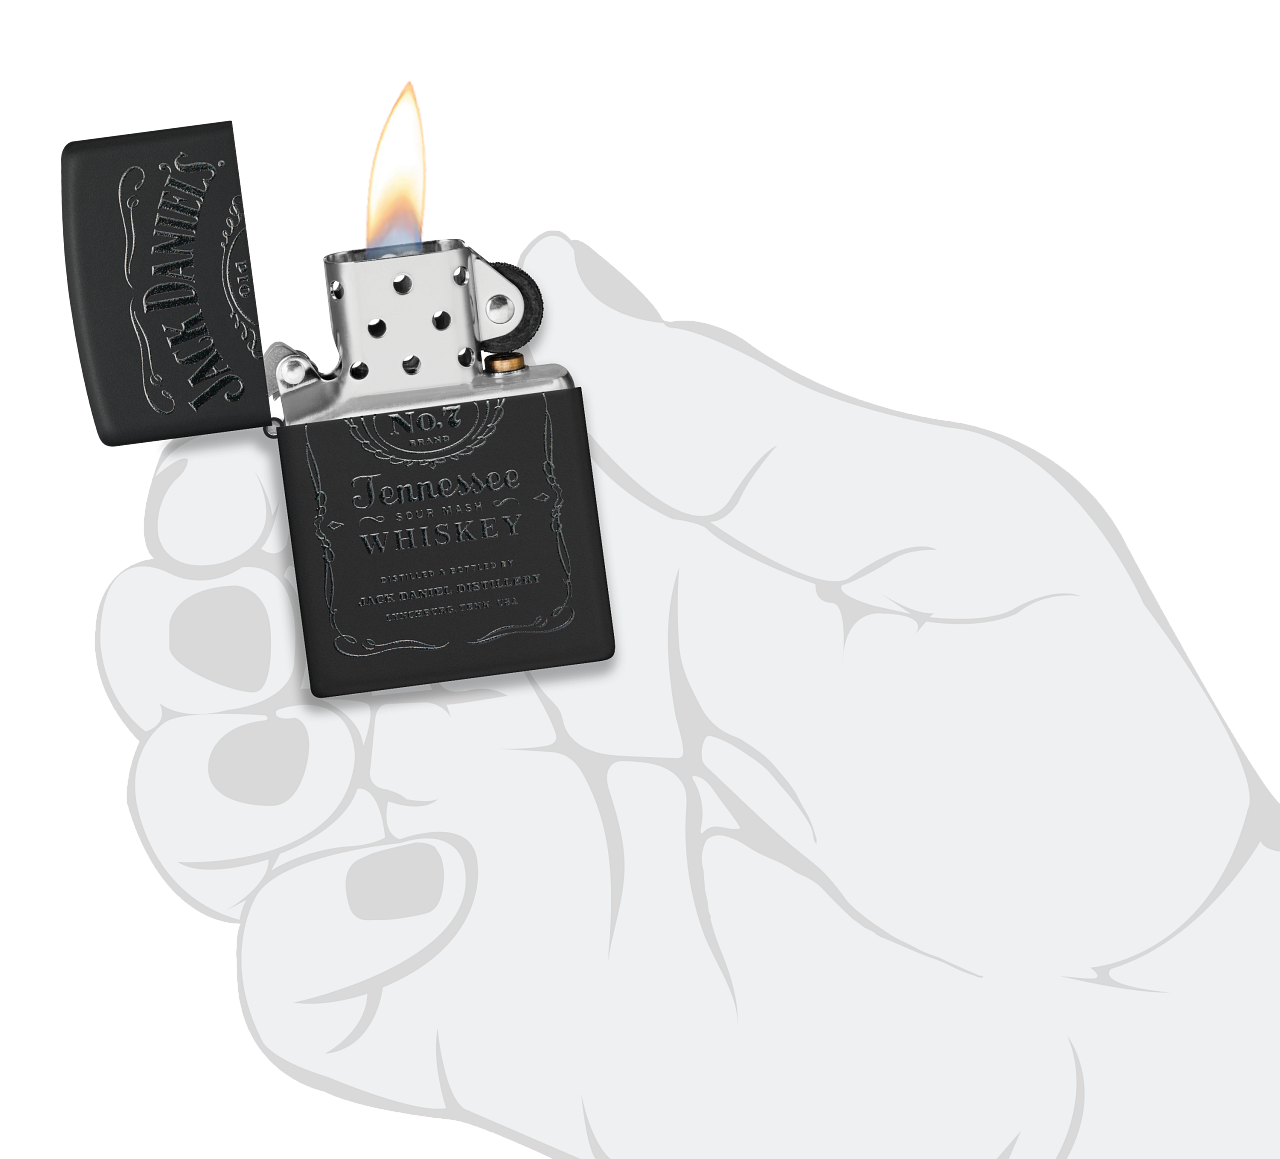 Zippo Jack Daniels Black Matte Lighter and Pouch Gift Set #48460